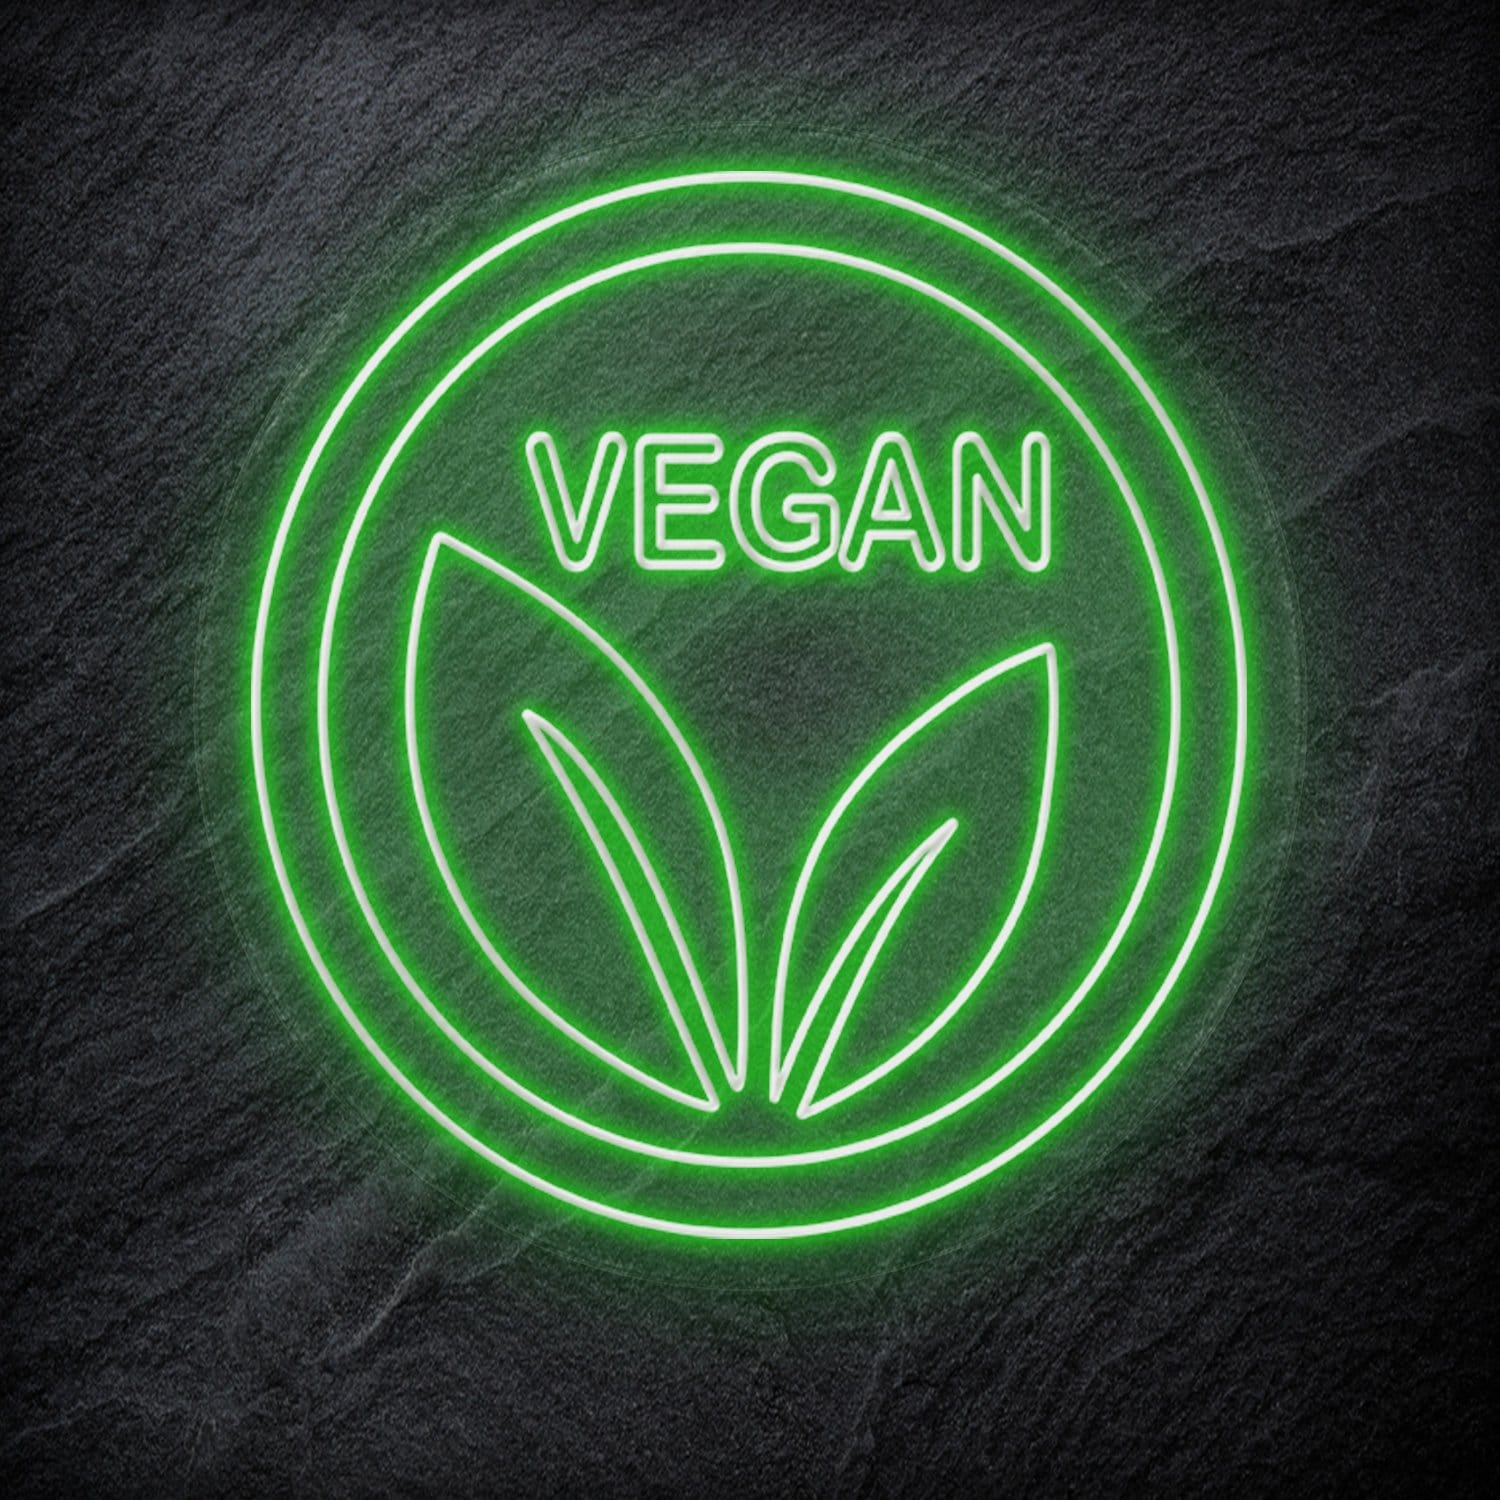 " Vegan" LED Neonschild - NEONEVERGLOW